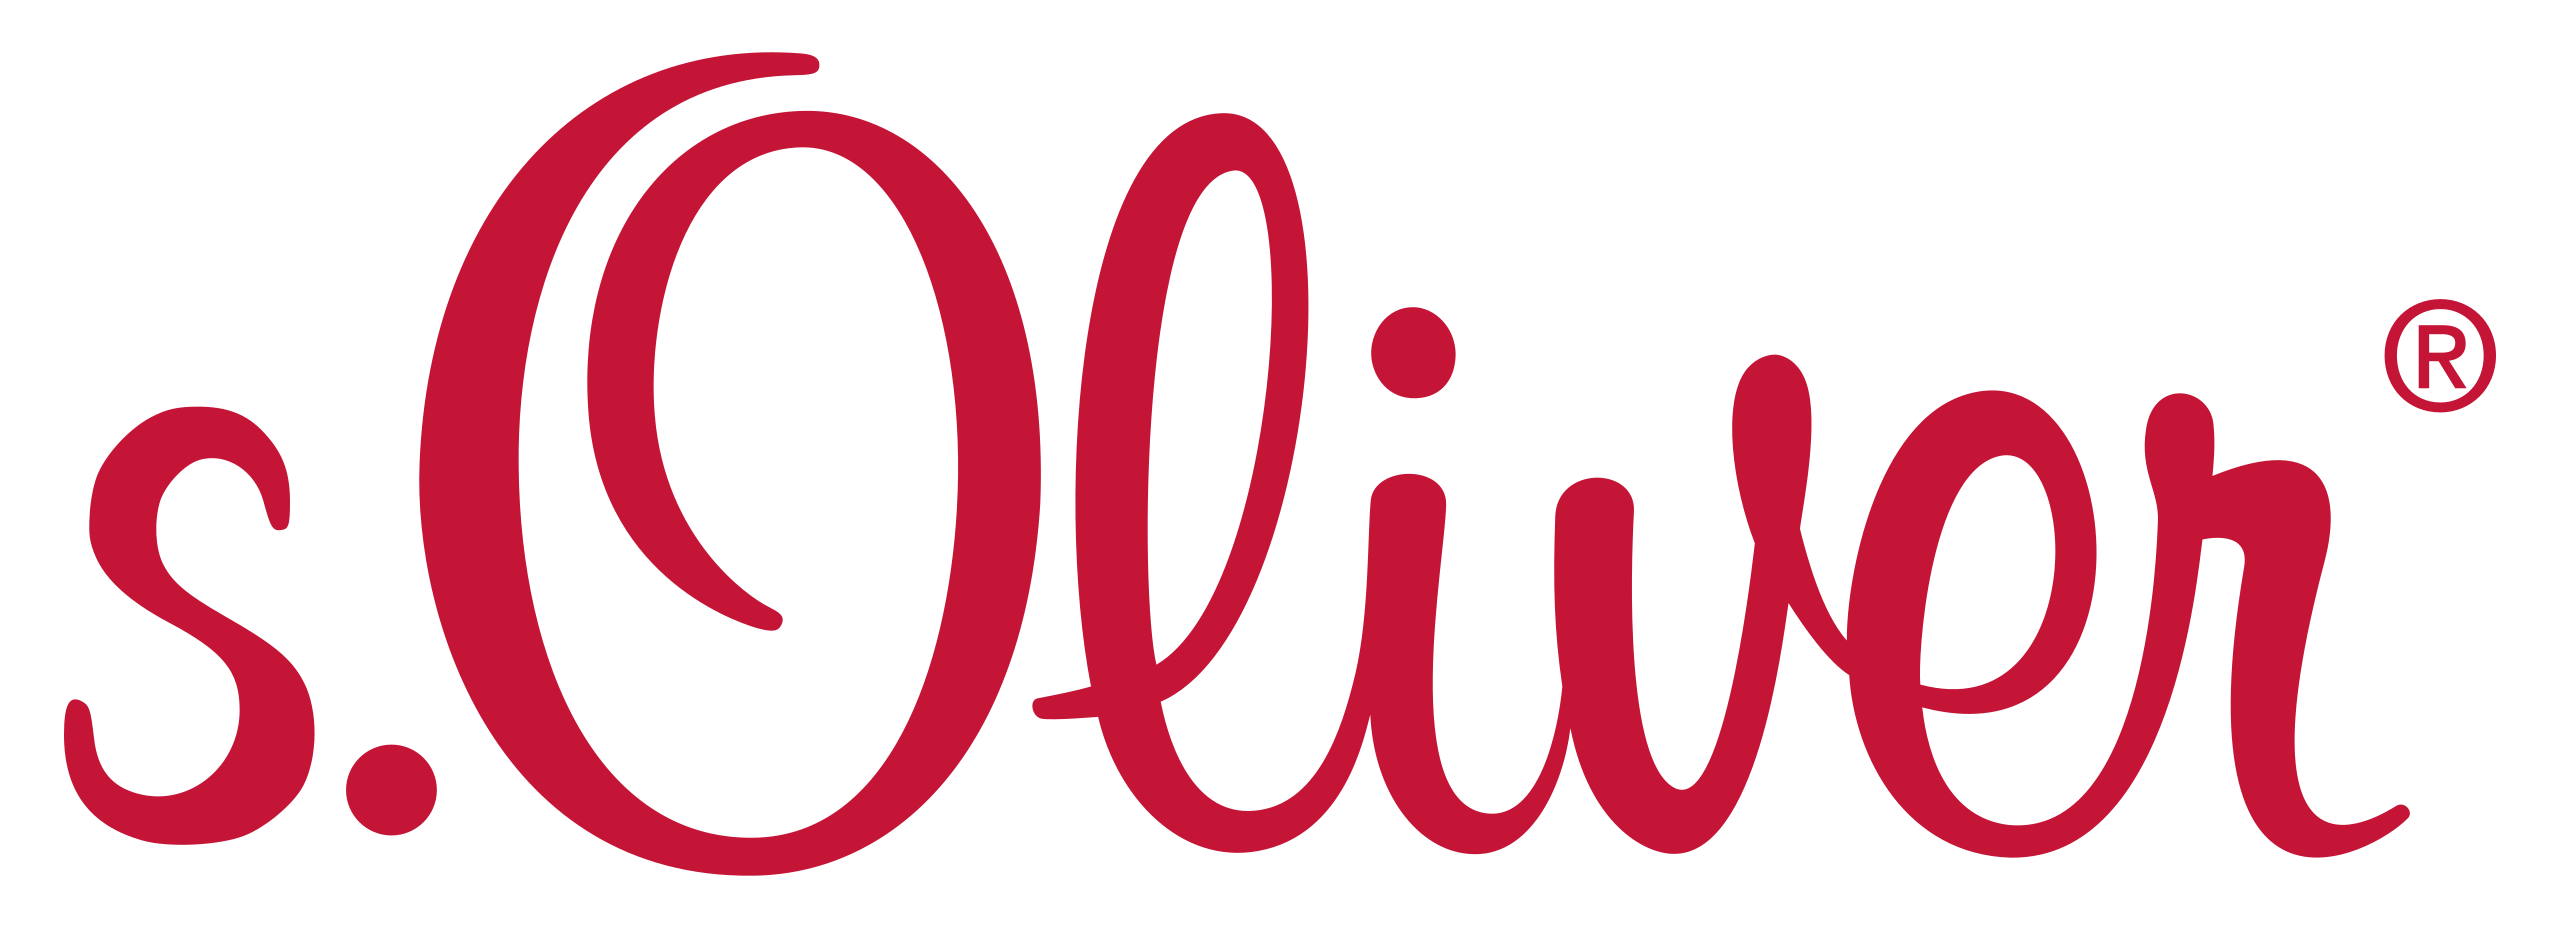 S.Oliver_Logo